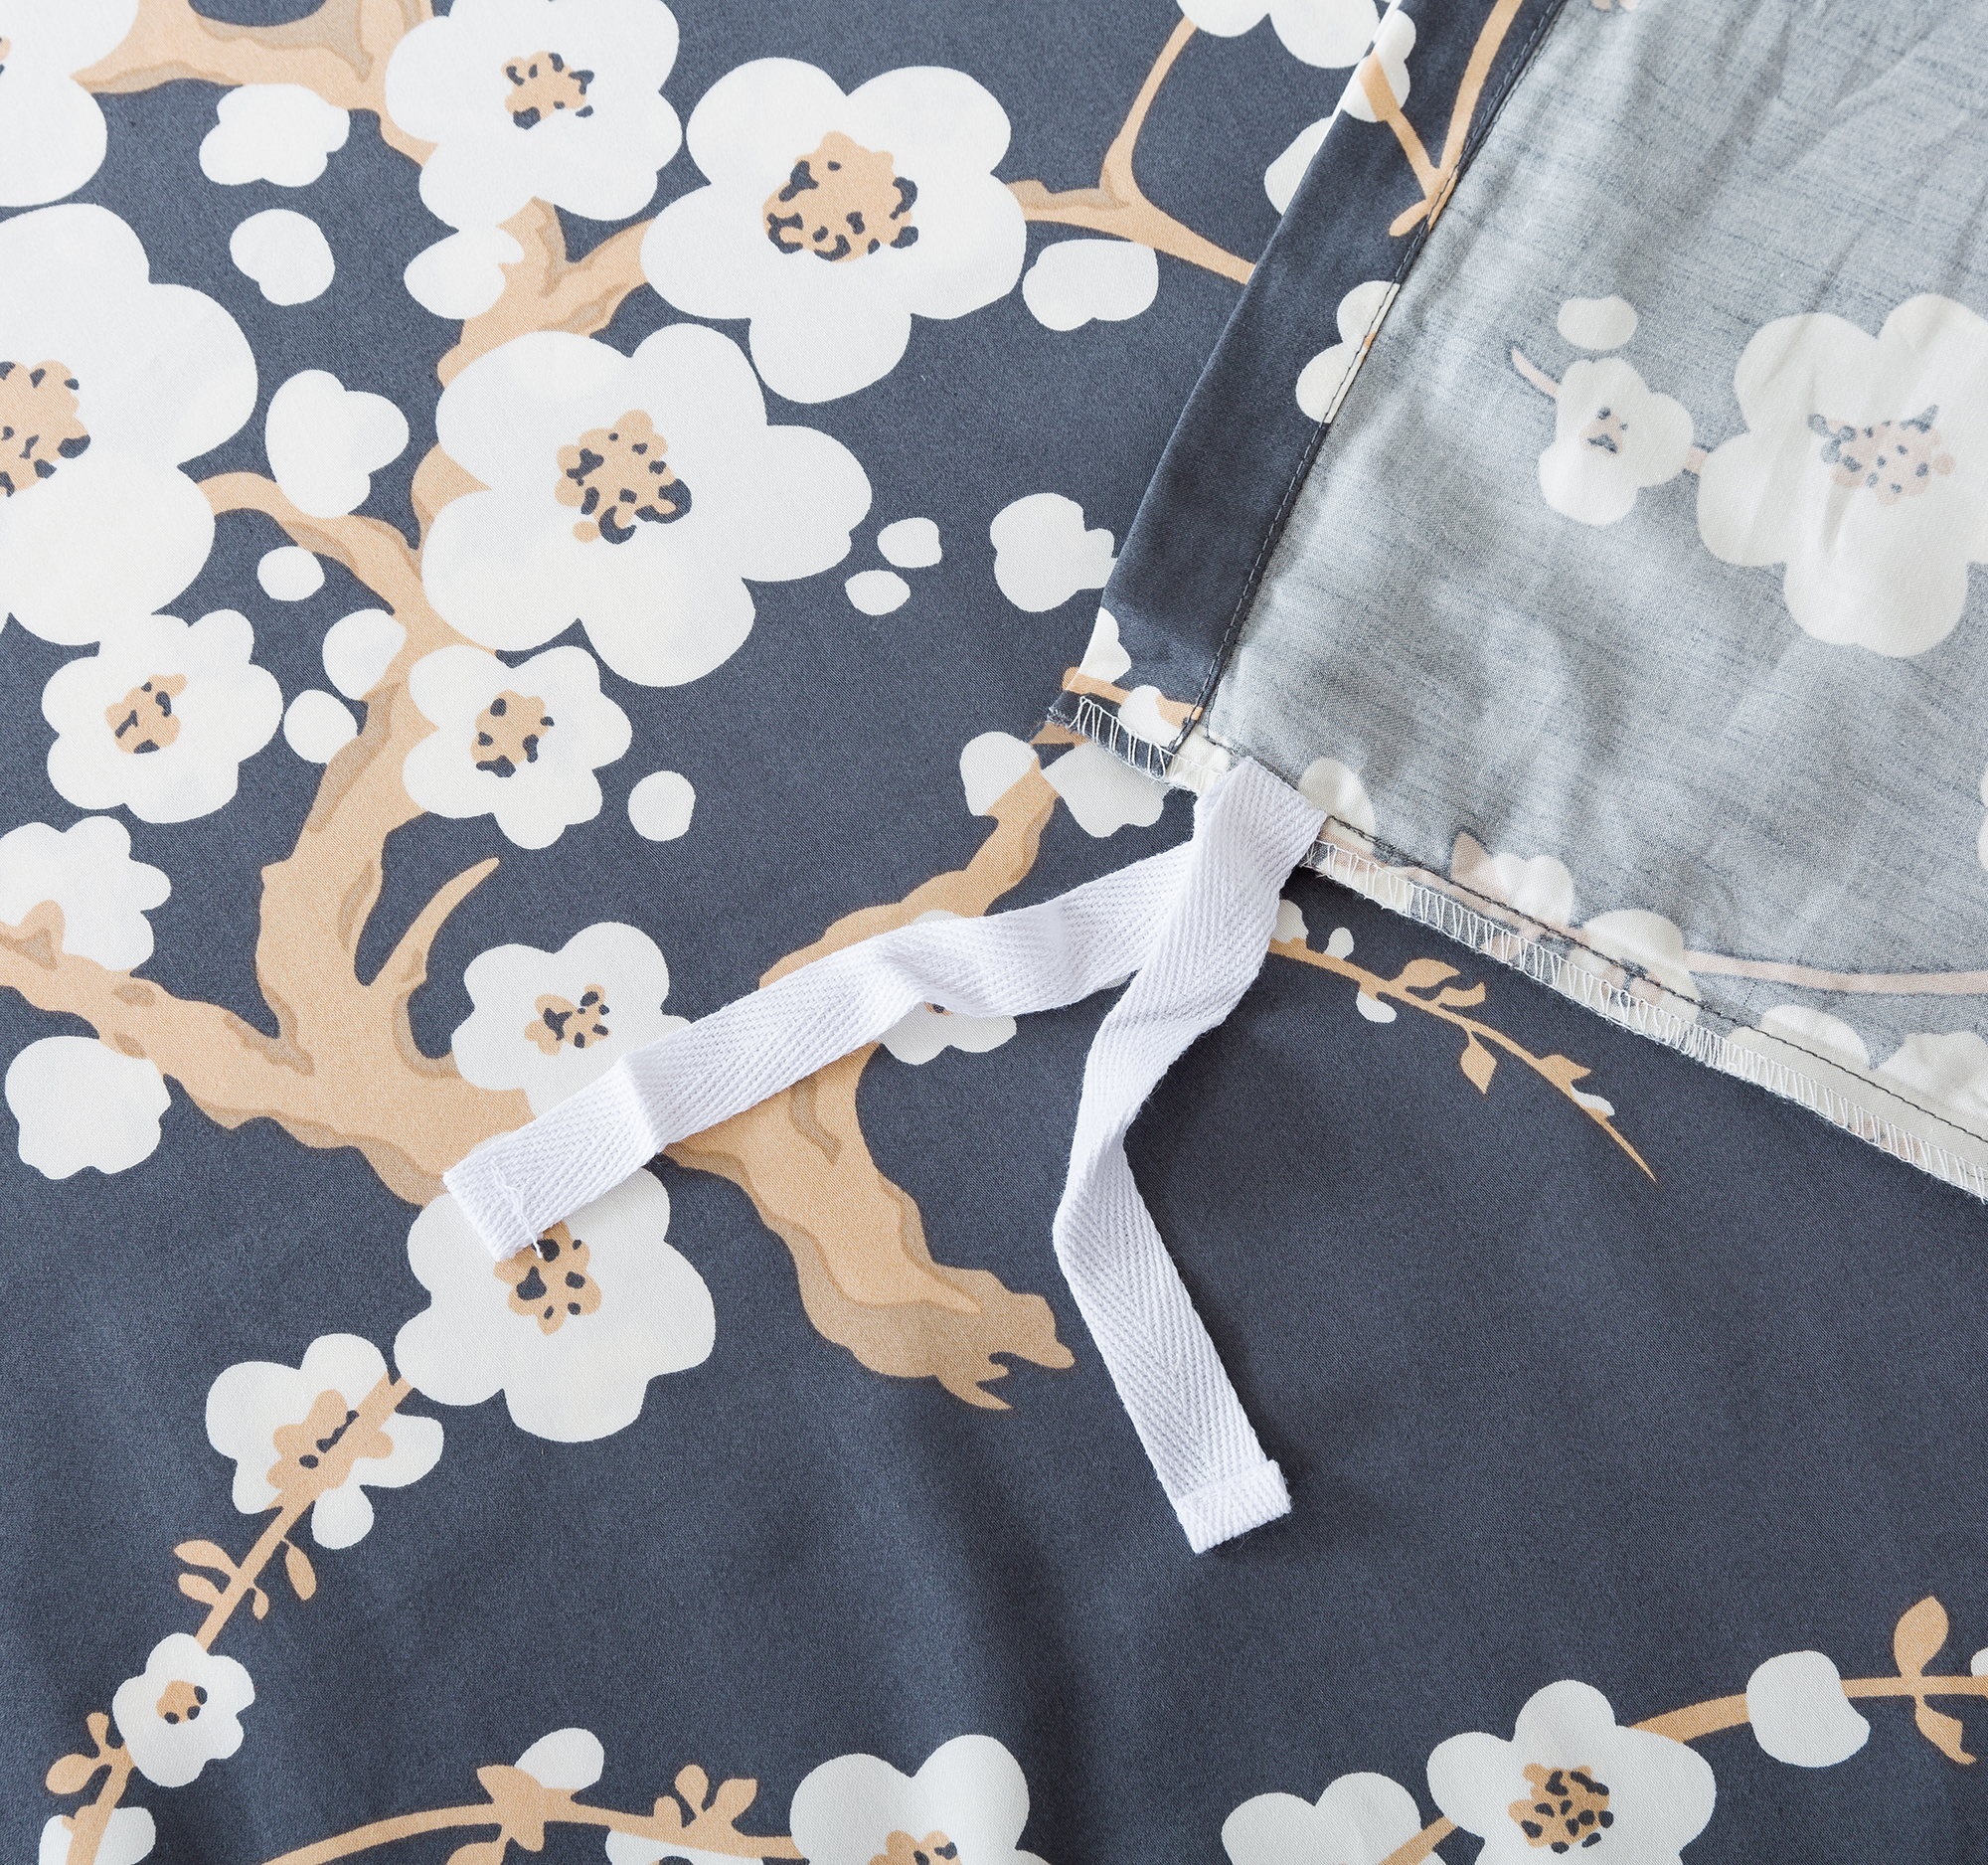 Roostery Pillow Sham 100% Cotton Sateen 26in x 26in Knife-Edge Sham Red Pagoda Garden Modern Japanese Flower Floral Summer Print